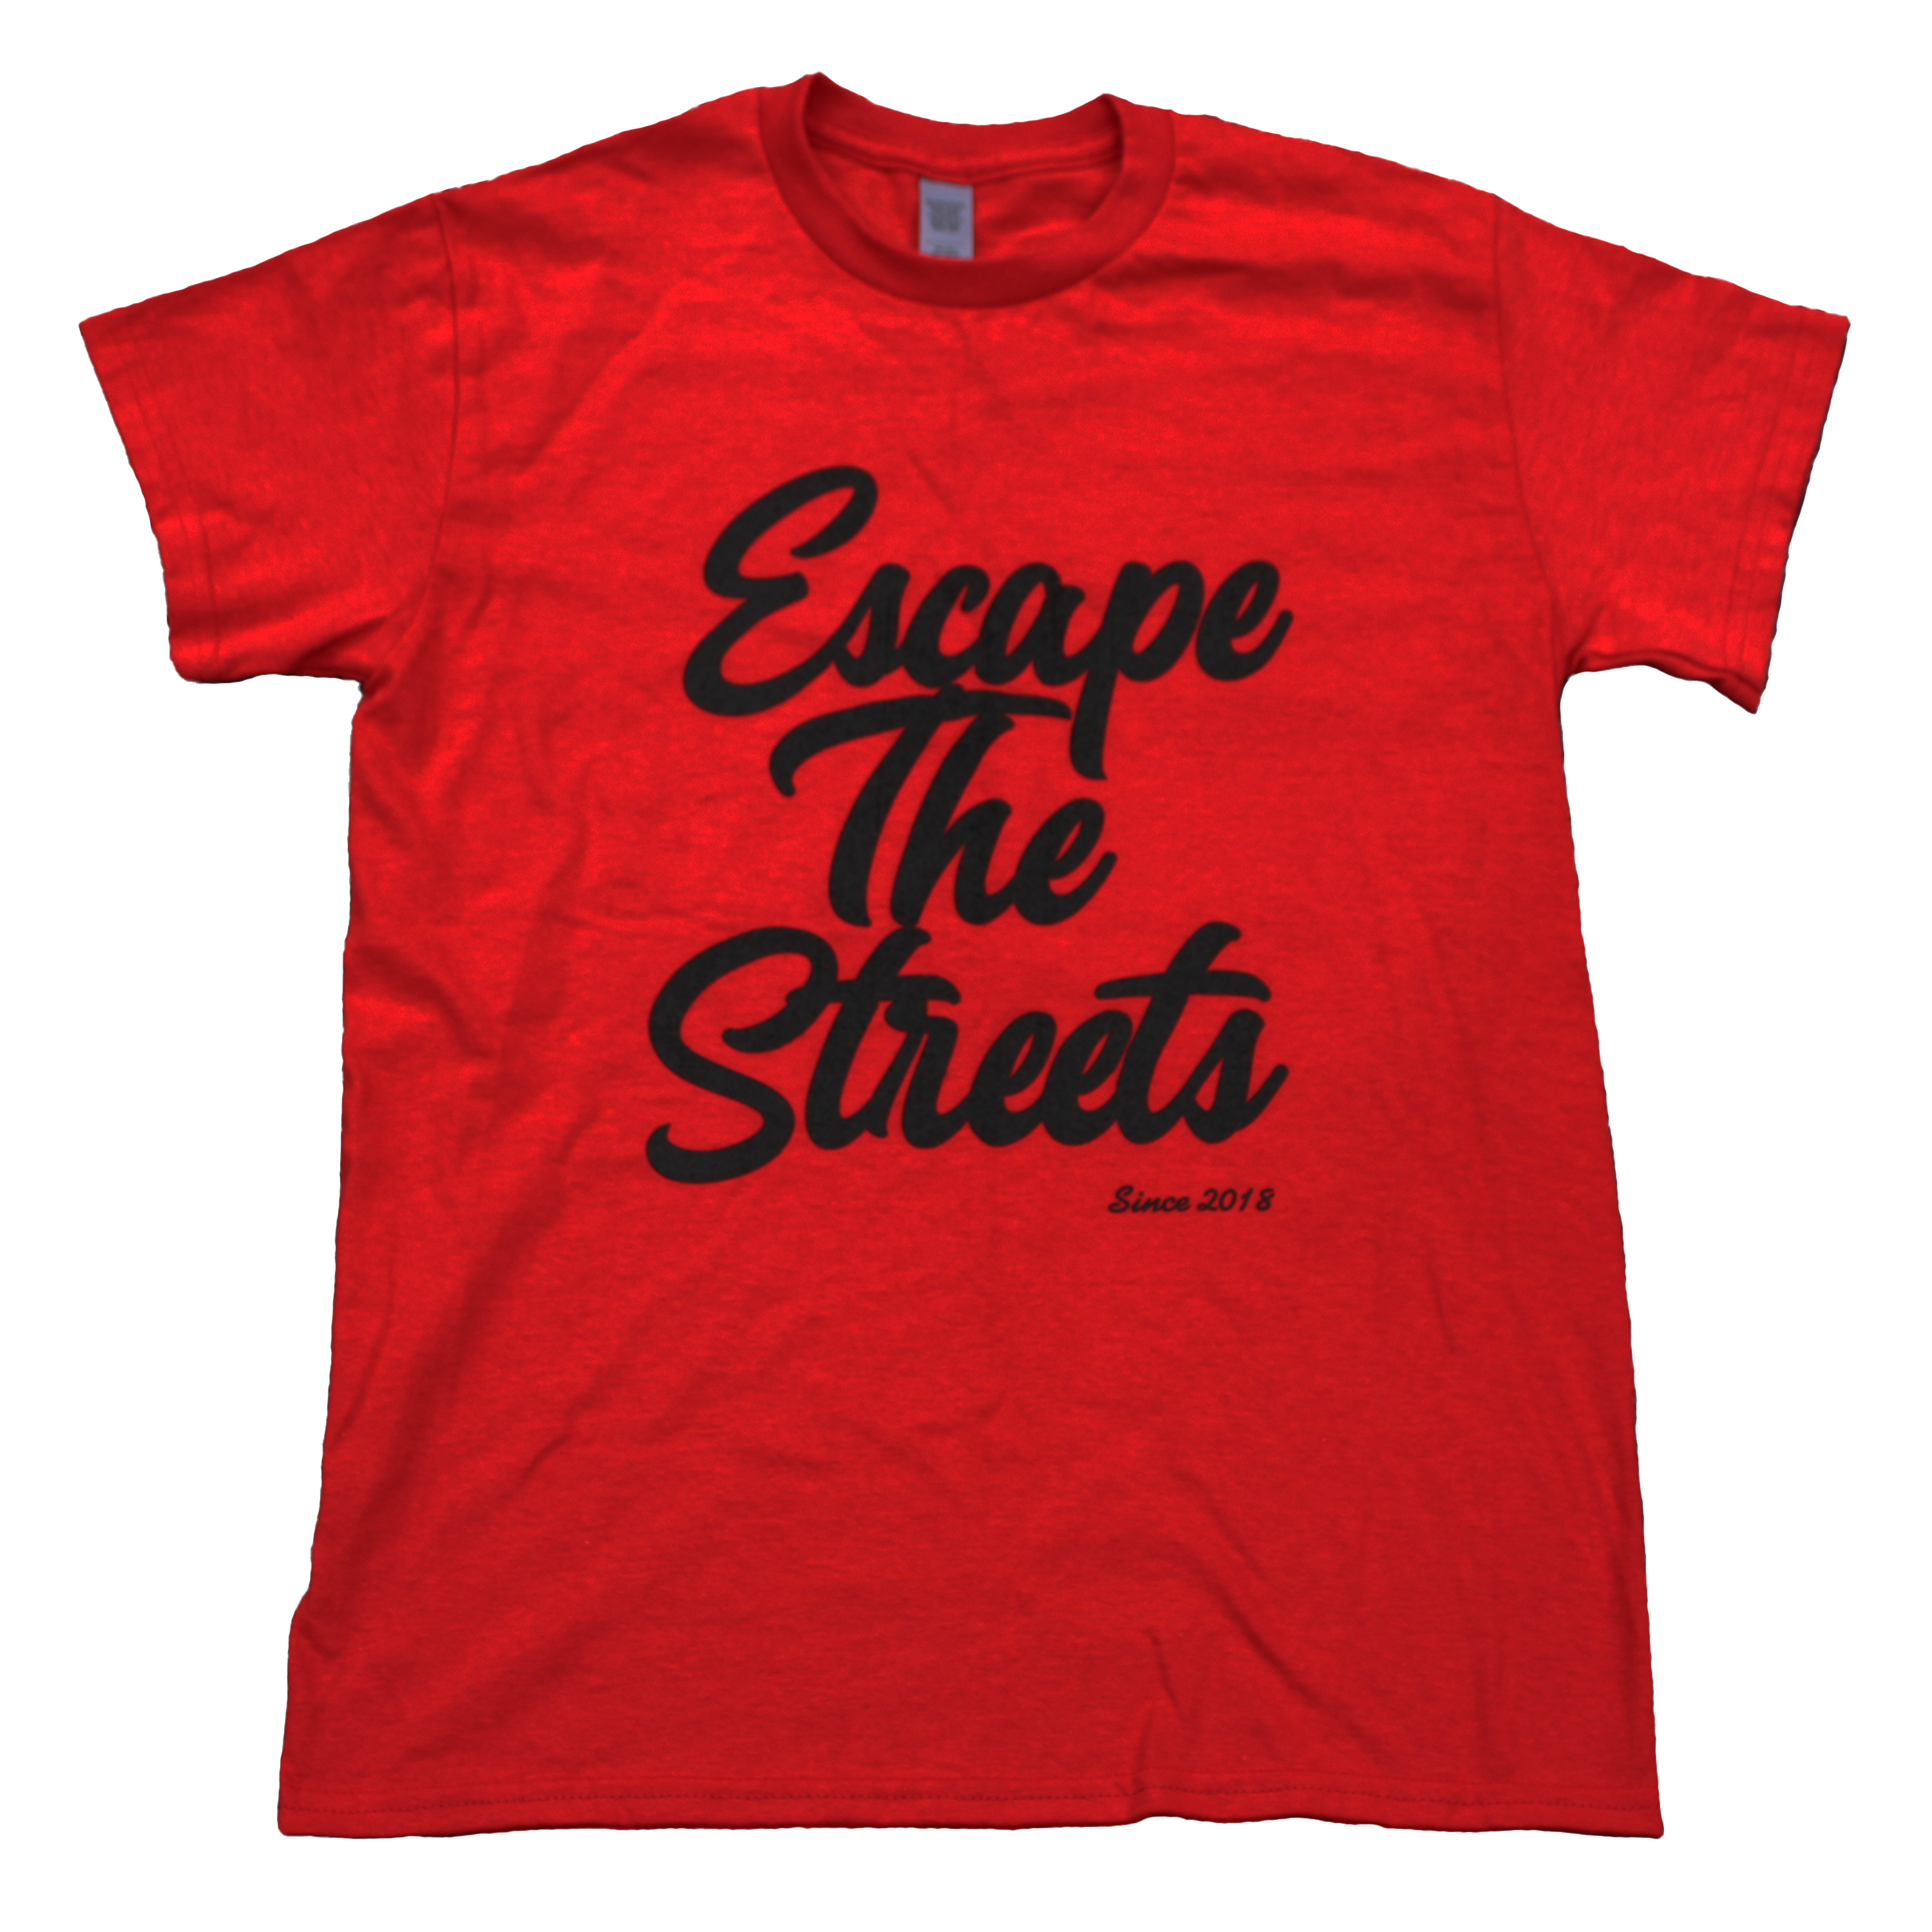 EscapeTheStreets T-Shirt Red/Black